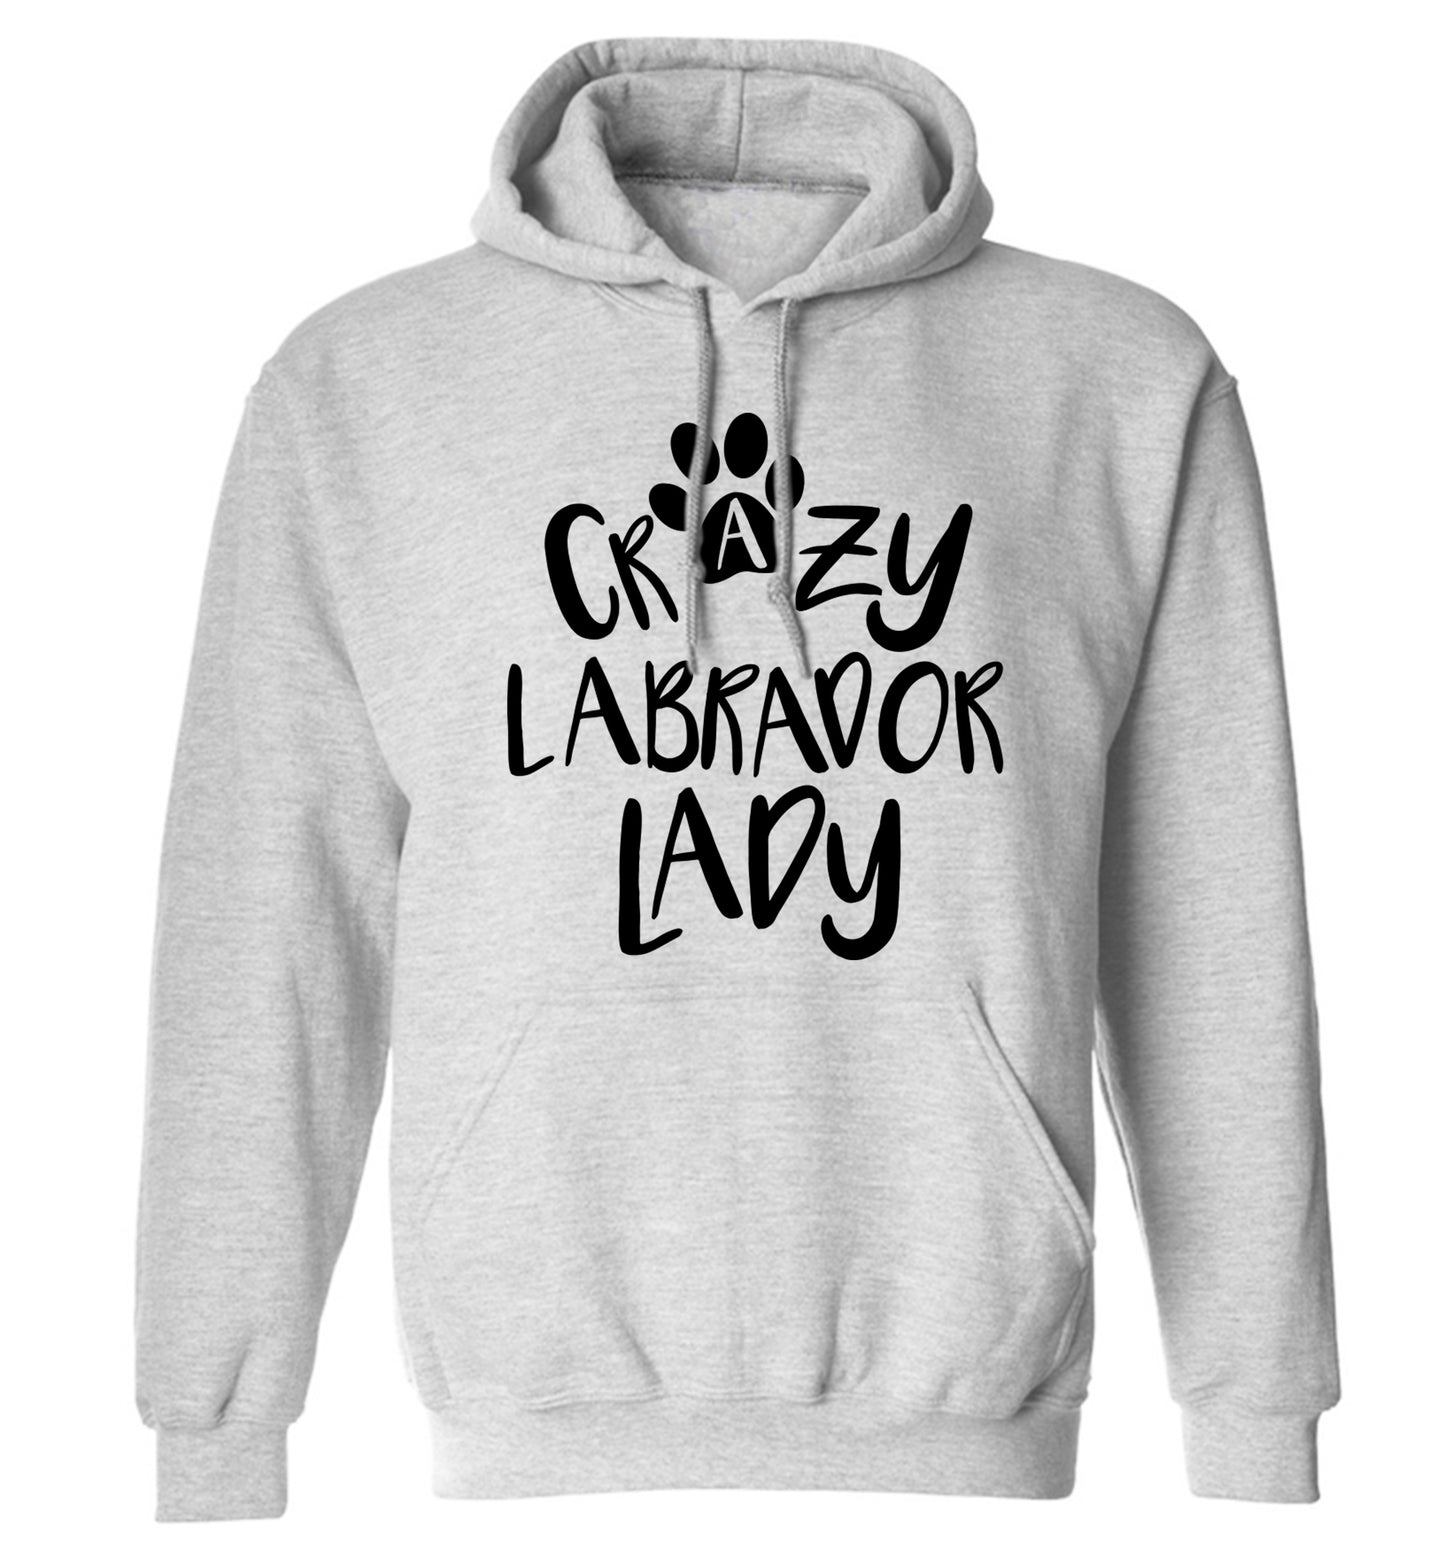 Crazy labrador lady adults unisex grey hoodie 2XL